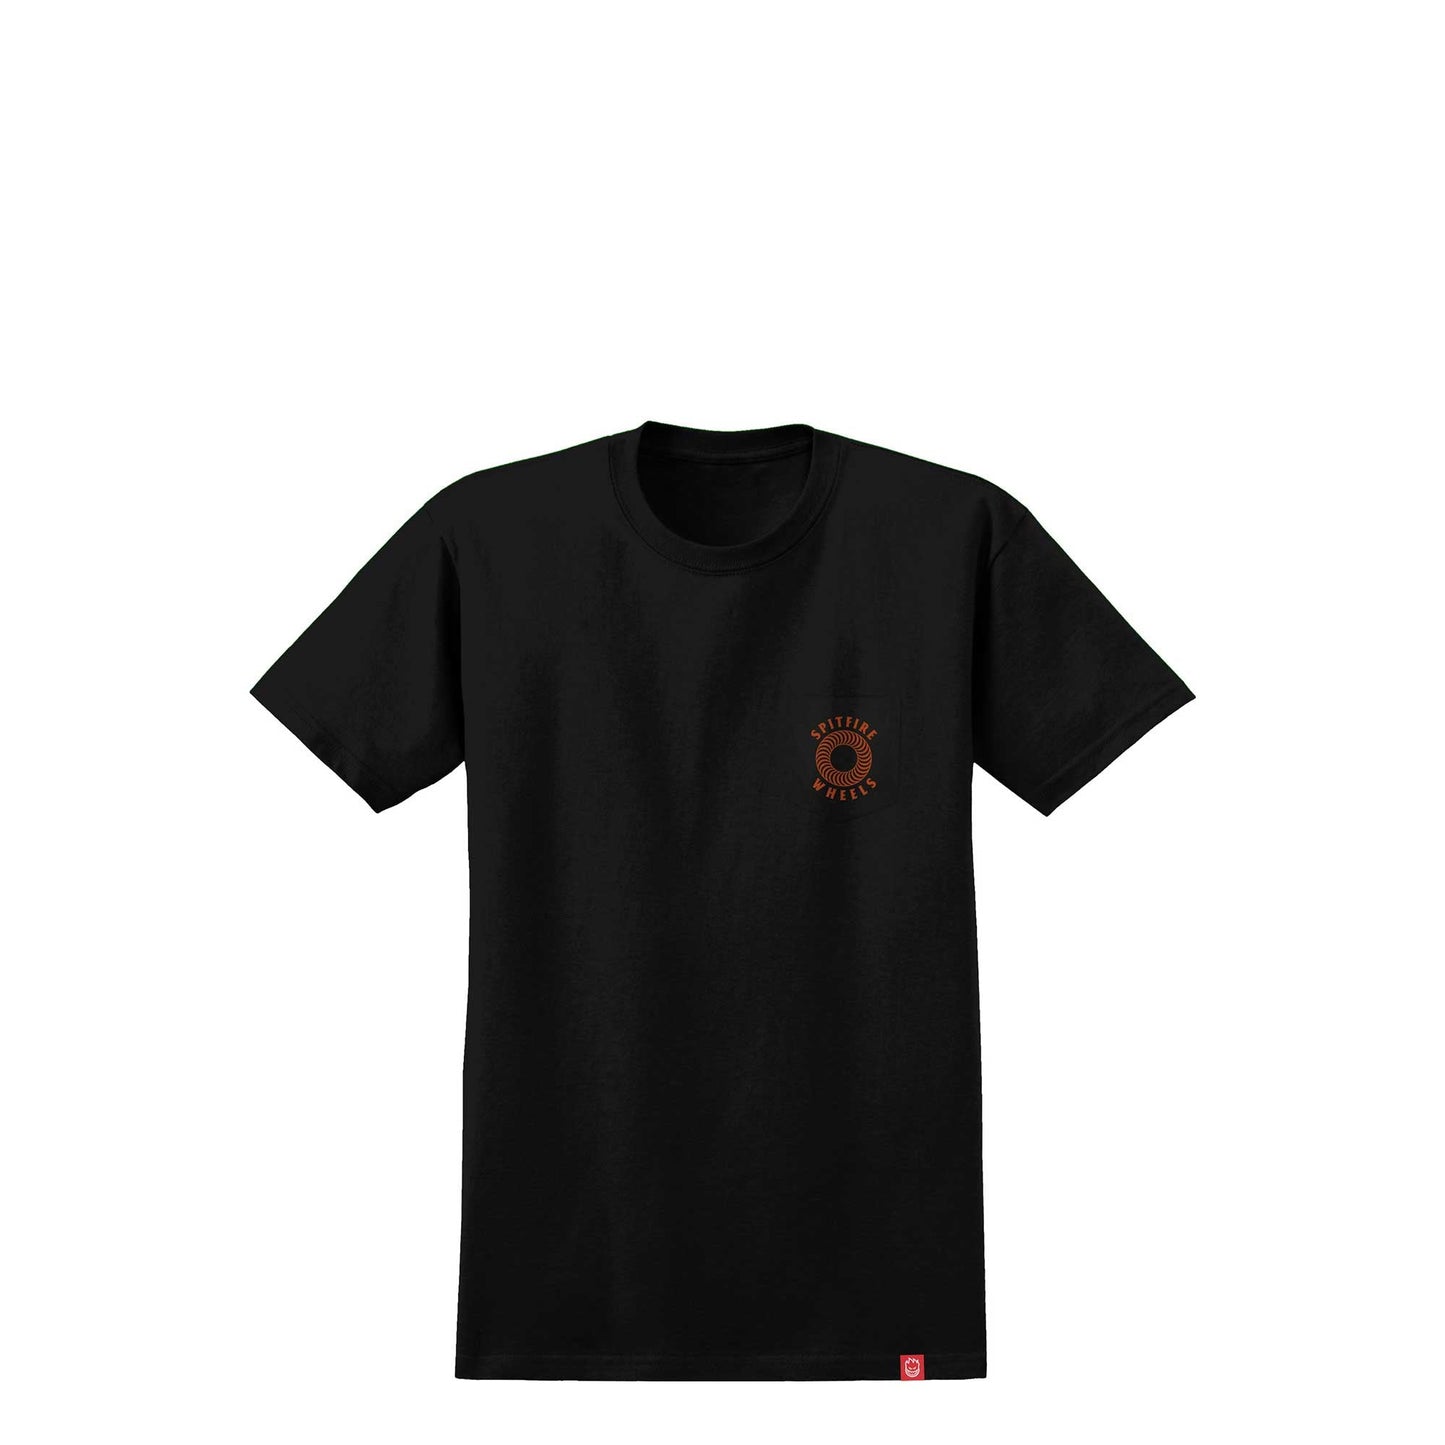 Spitfire Hollow Classic Pocket T-Shirt, black w/ burnt orange prints - Tiki Room Skateboards - 2